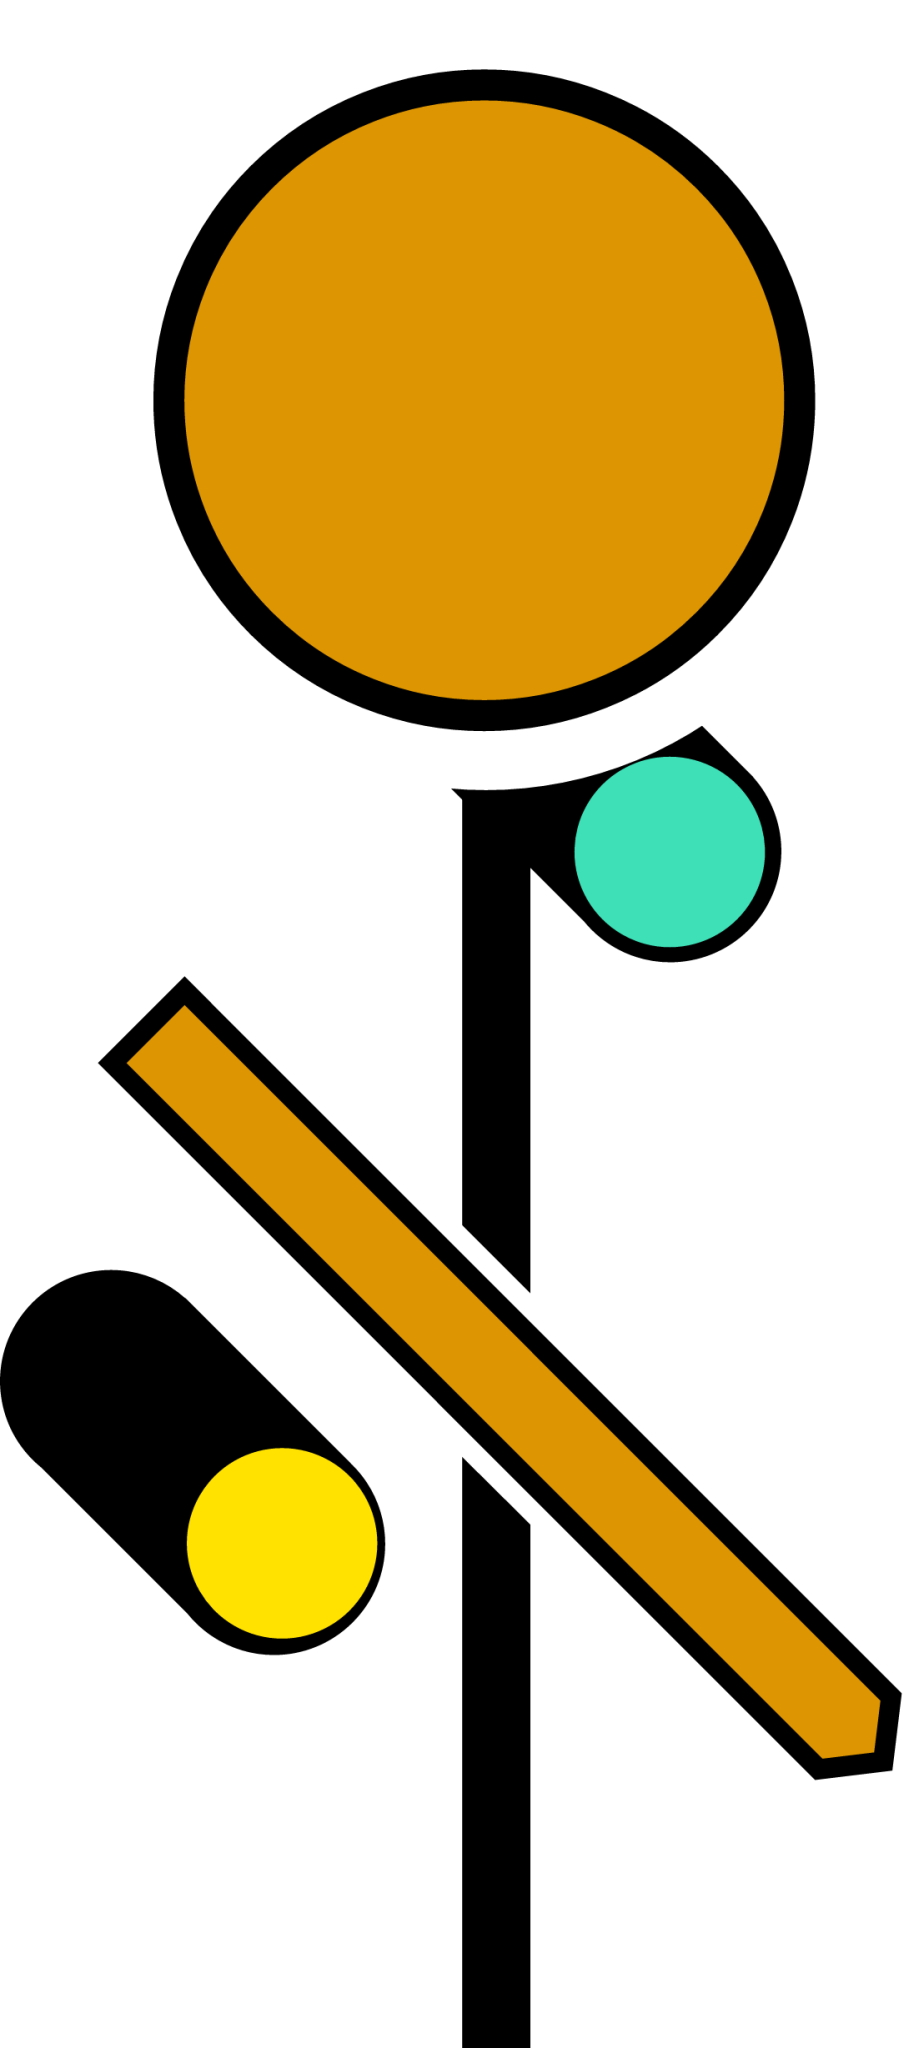 HV Vr2 semaphore2 icon